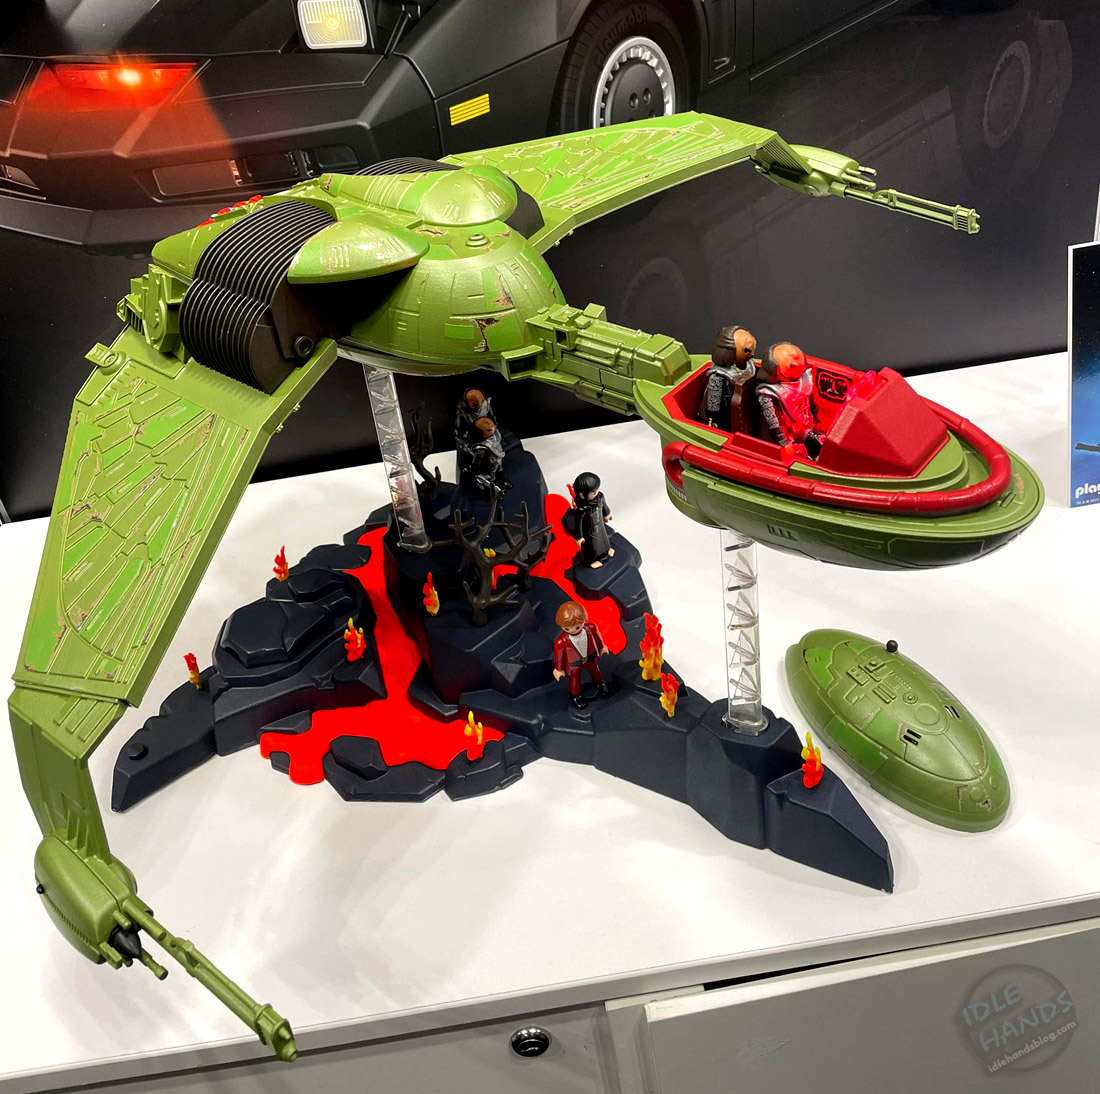 NYCC 2022: Playmobil's Star Trek Prototype and Naruto Figures